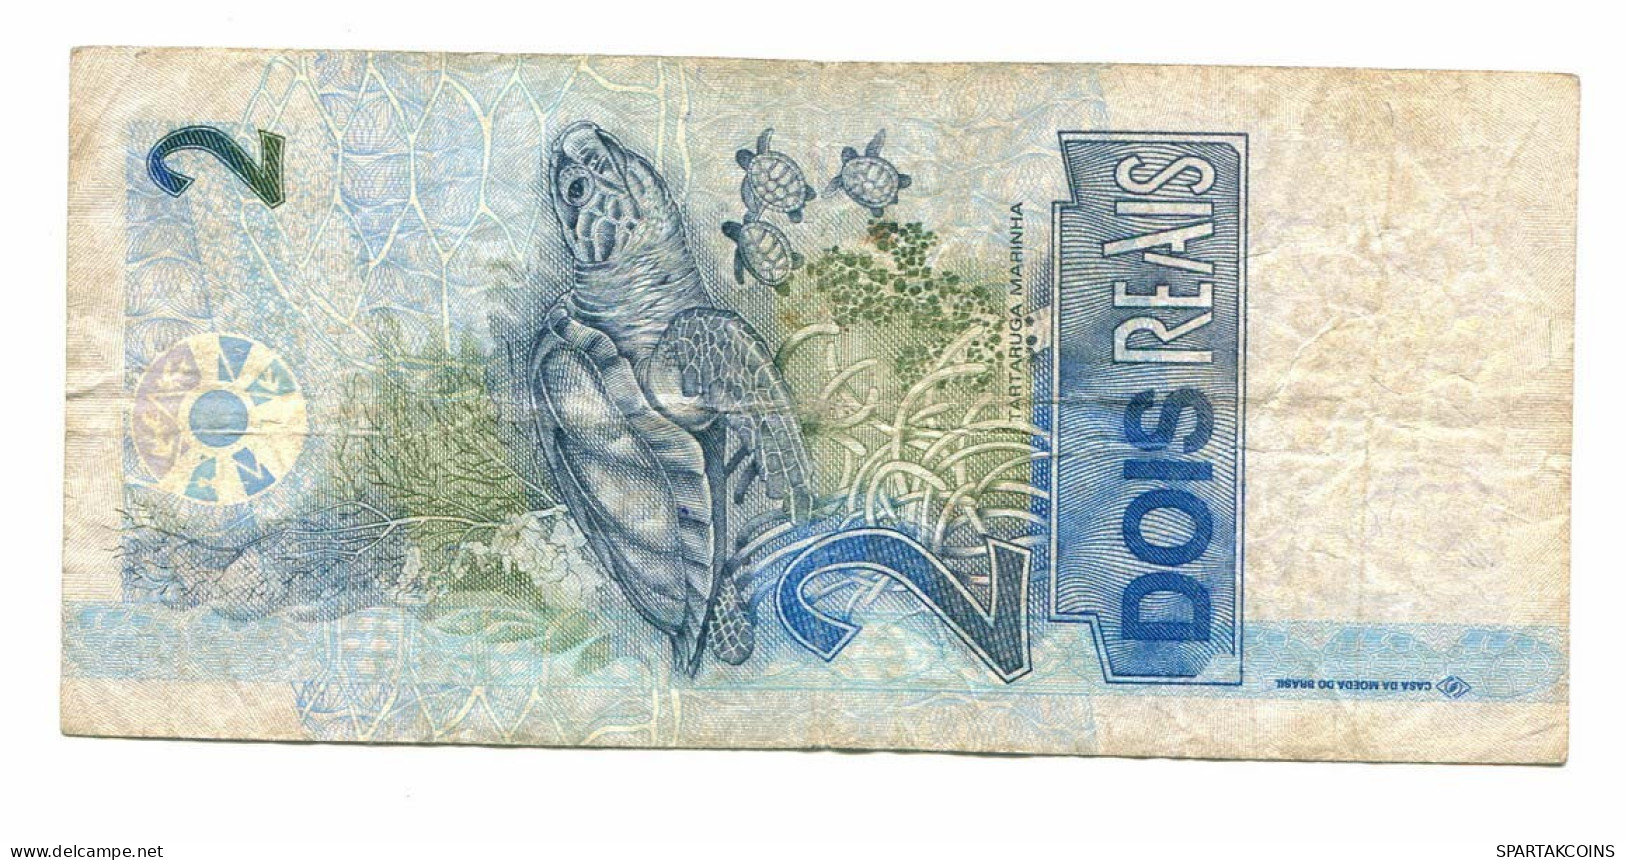 BRASIL 2 REAIS 2001 Tartaruga Paper Money Banknote #P10829.4 - [11] Emissions Locales